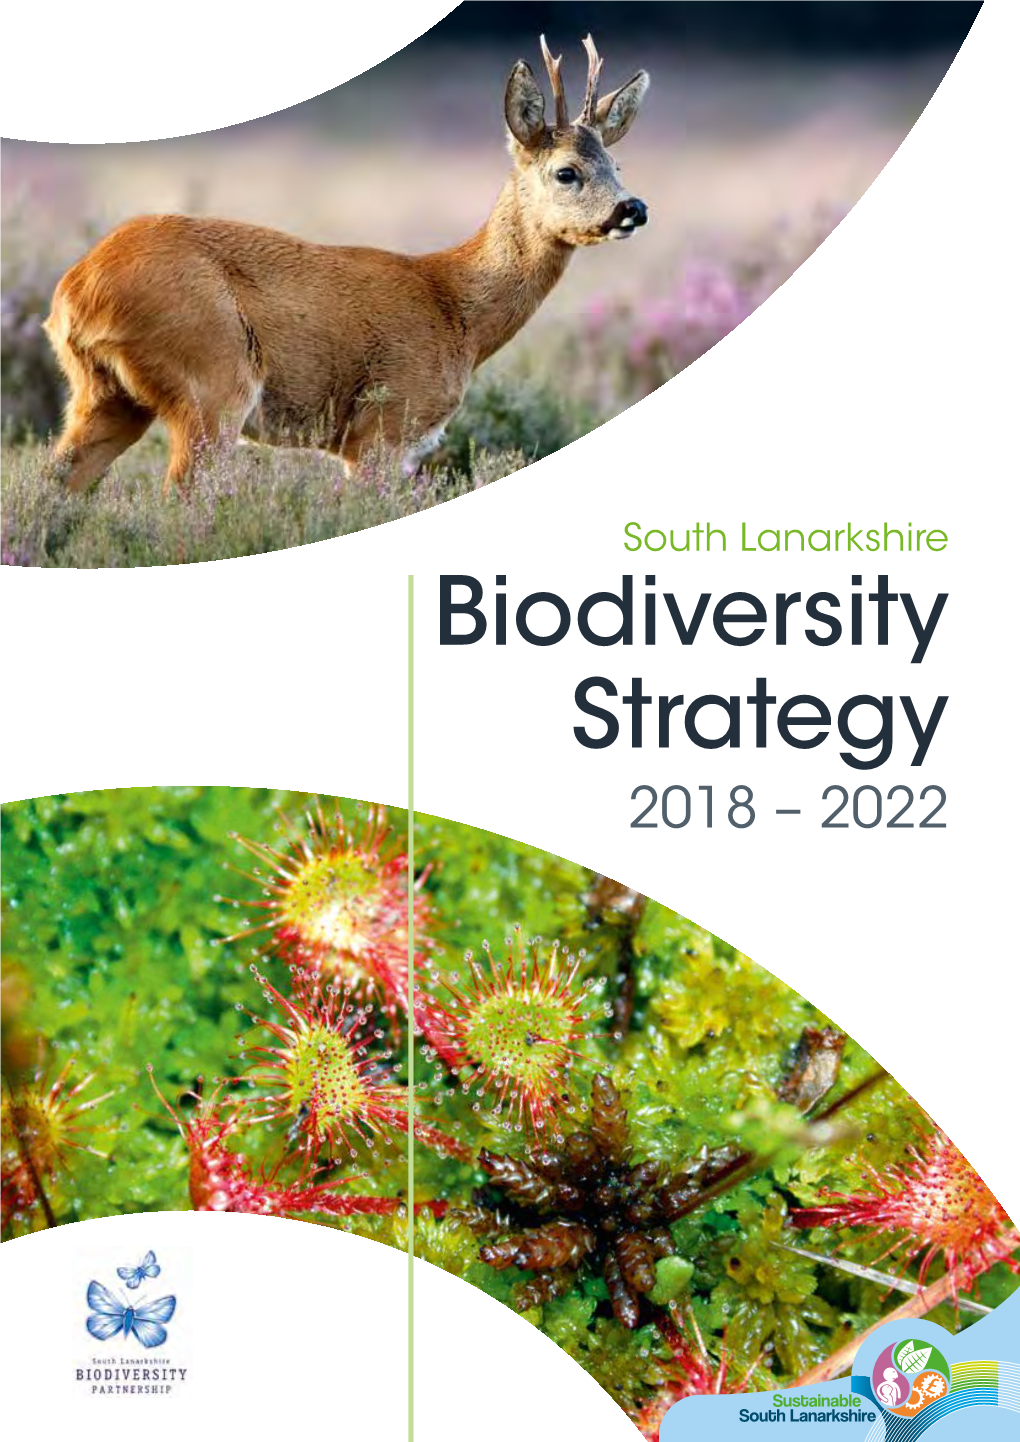 South Lanarkshire Biodiversity Strategy 2018-2022